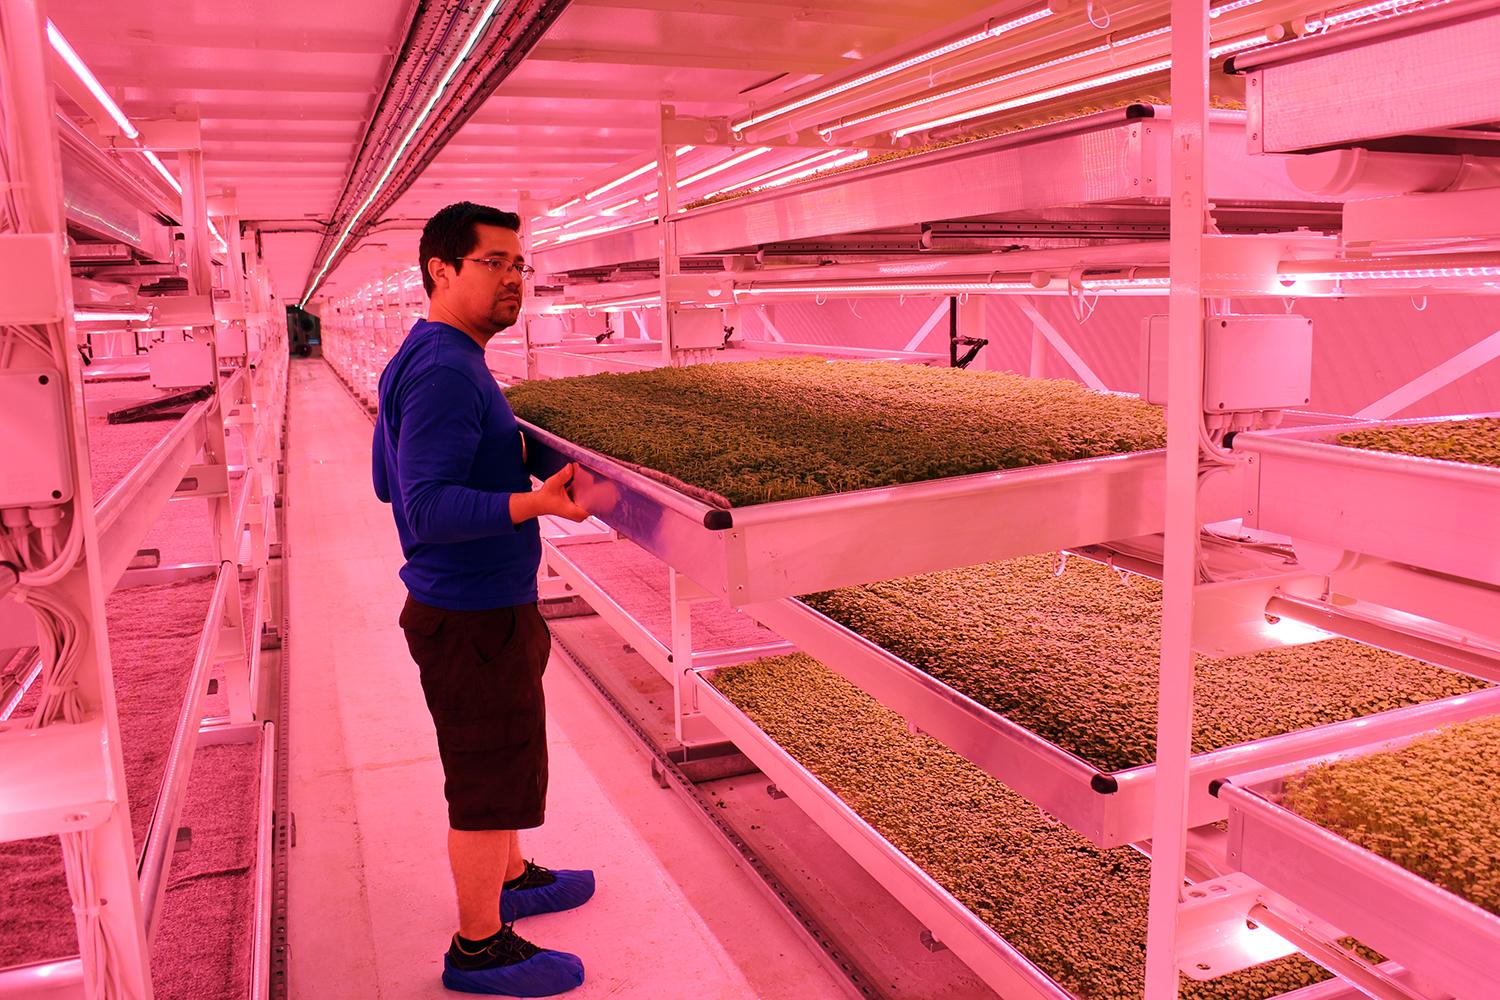 londons underground farm zero carbon food growing trays